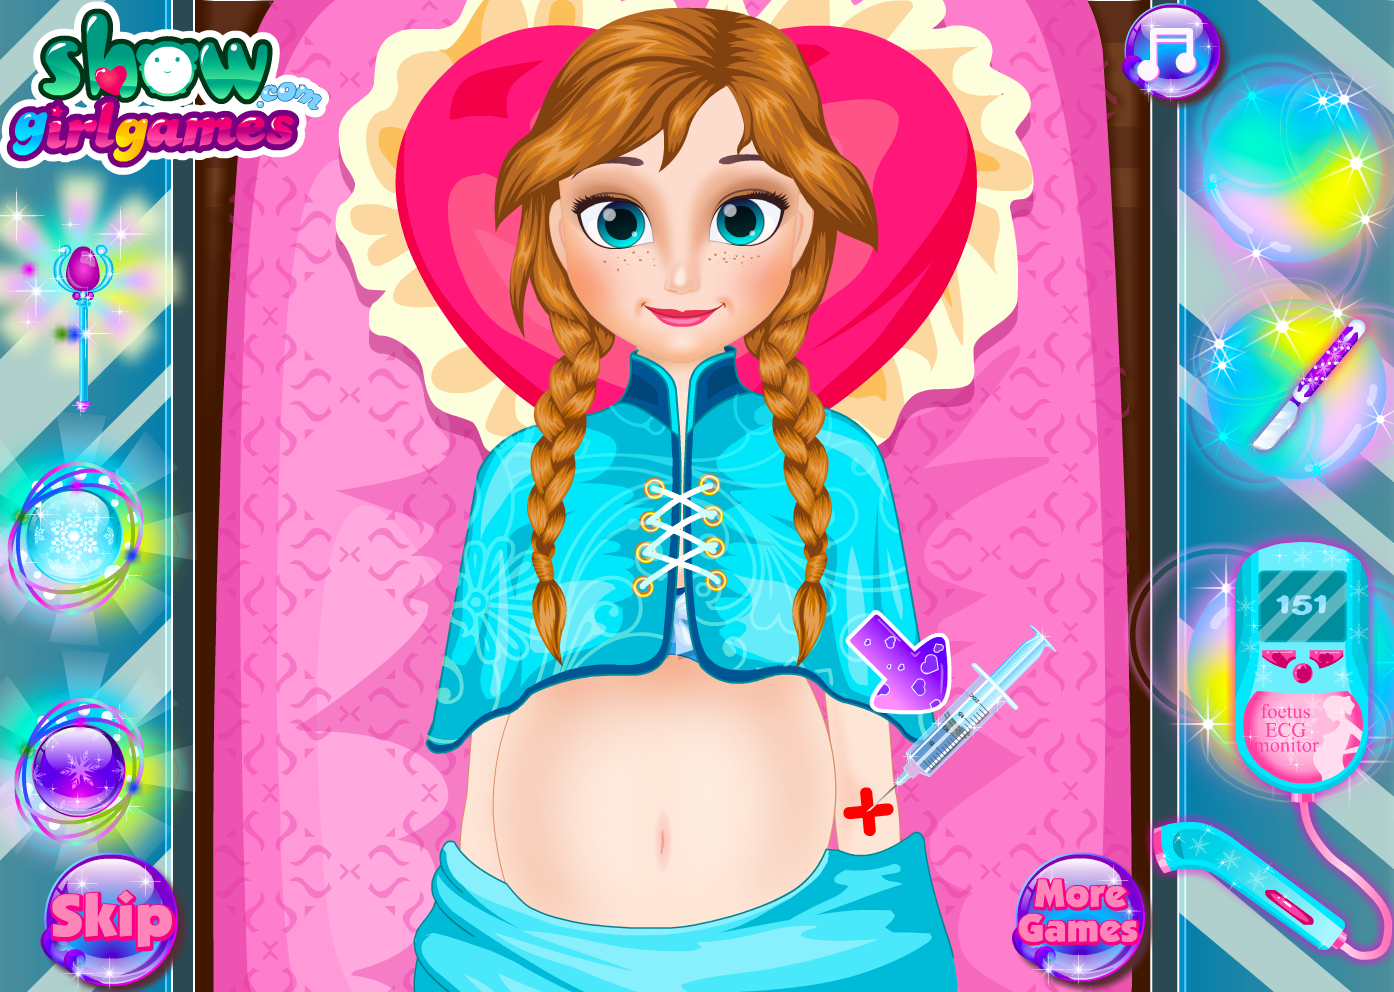 Anna Gives Birth unlicensed Frozen games: kids give her a cesarean